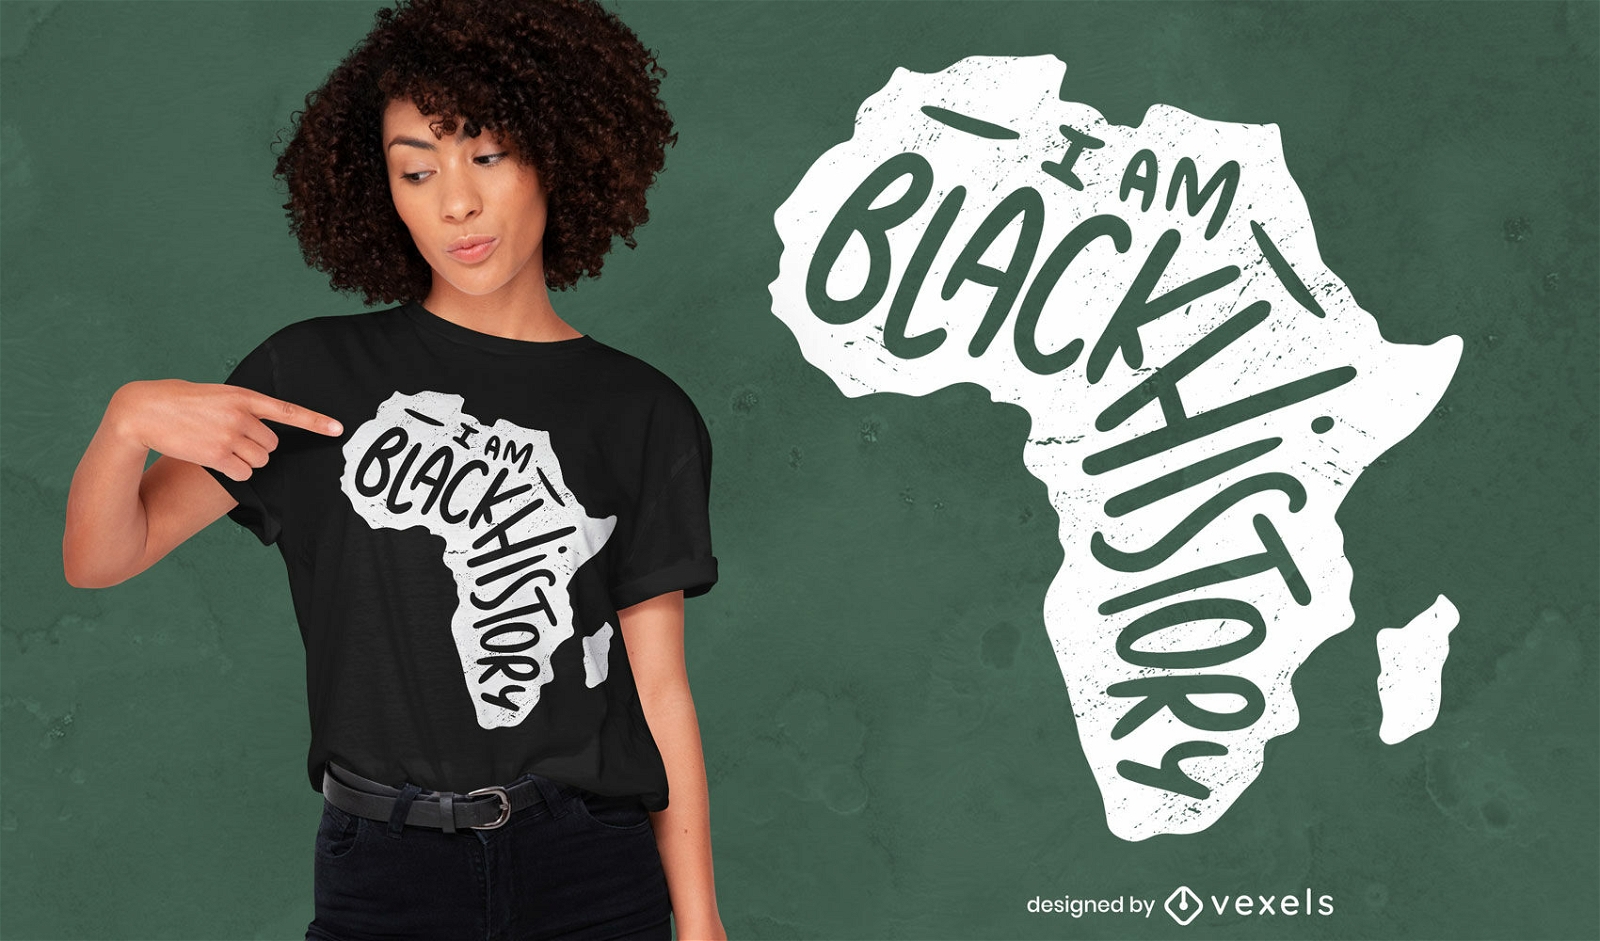 I am black history t-shirt design